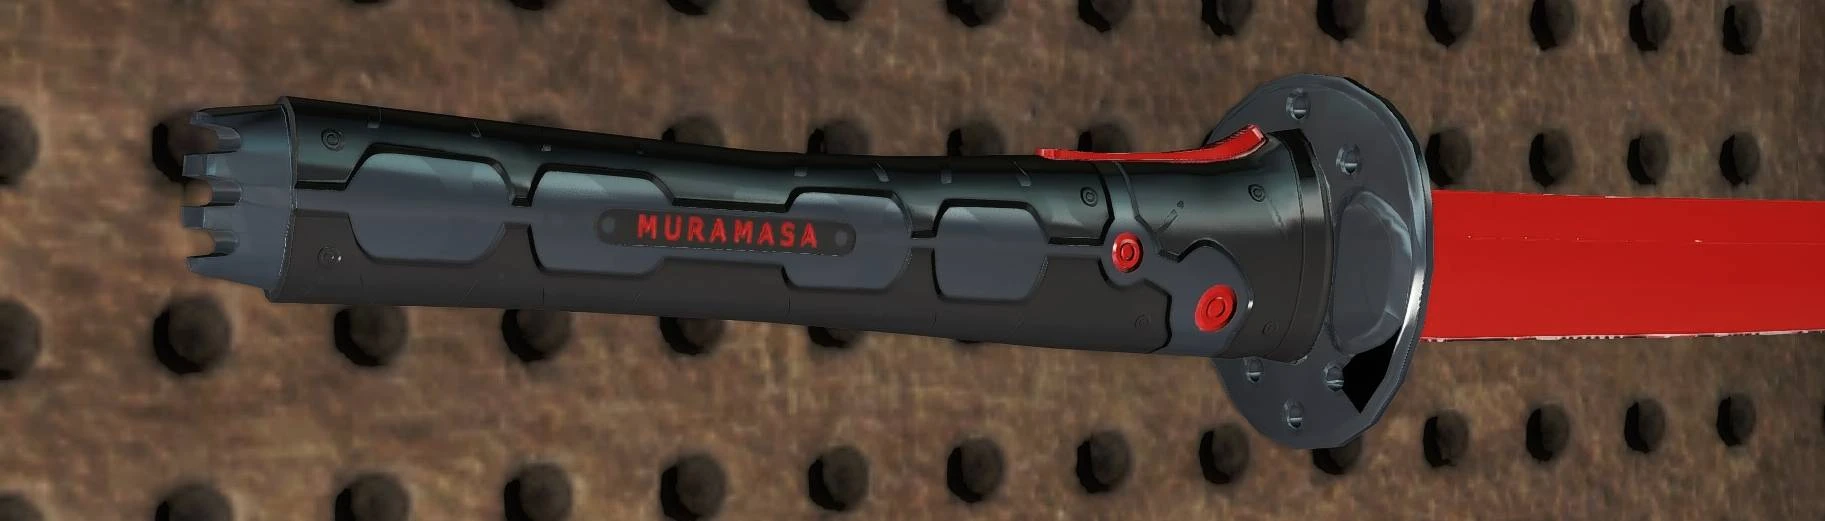 HF Murasama AKA Jetstream Sam sword from Metal Gear Rising